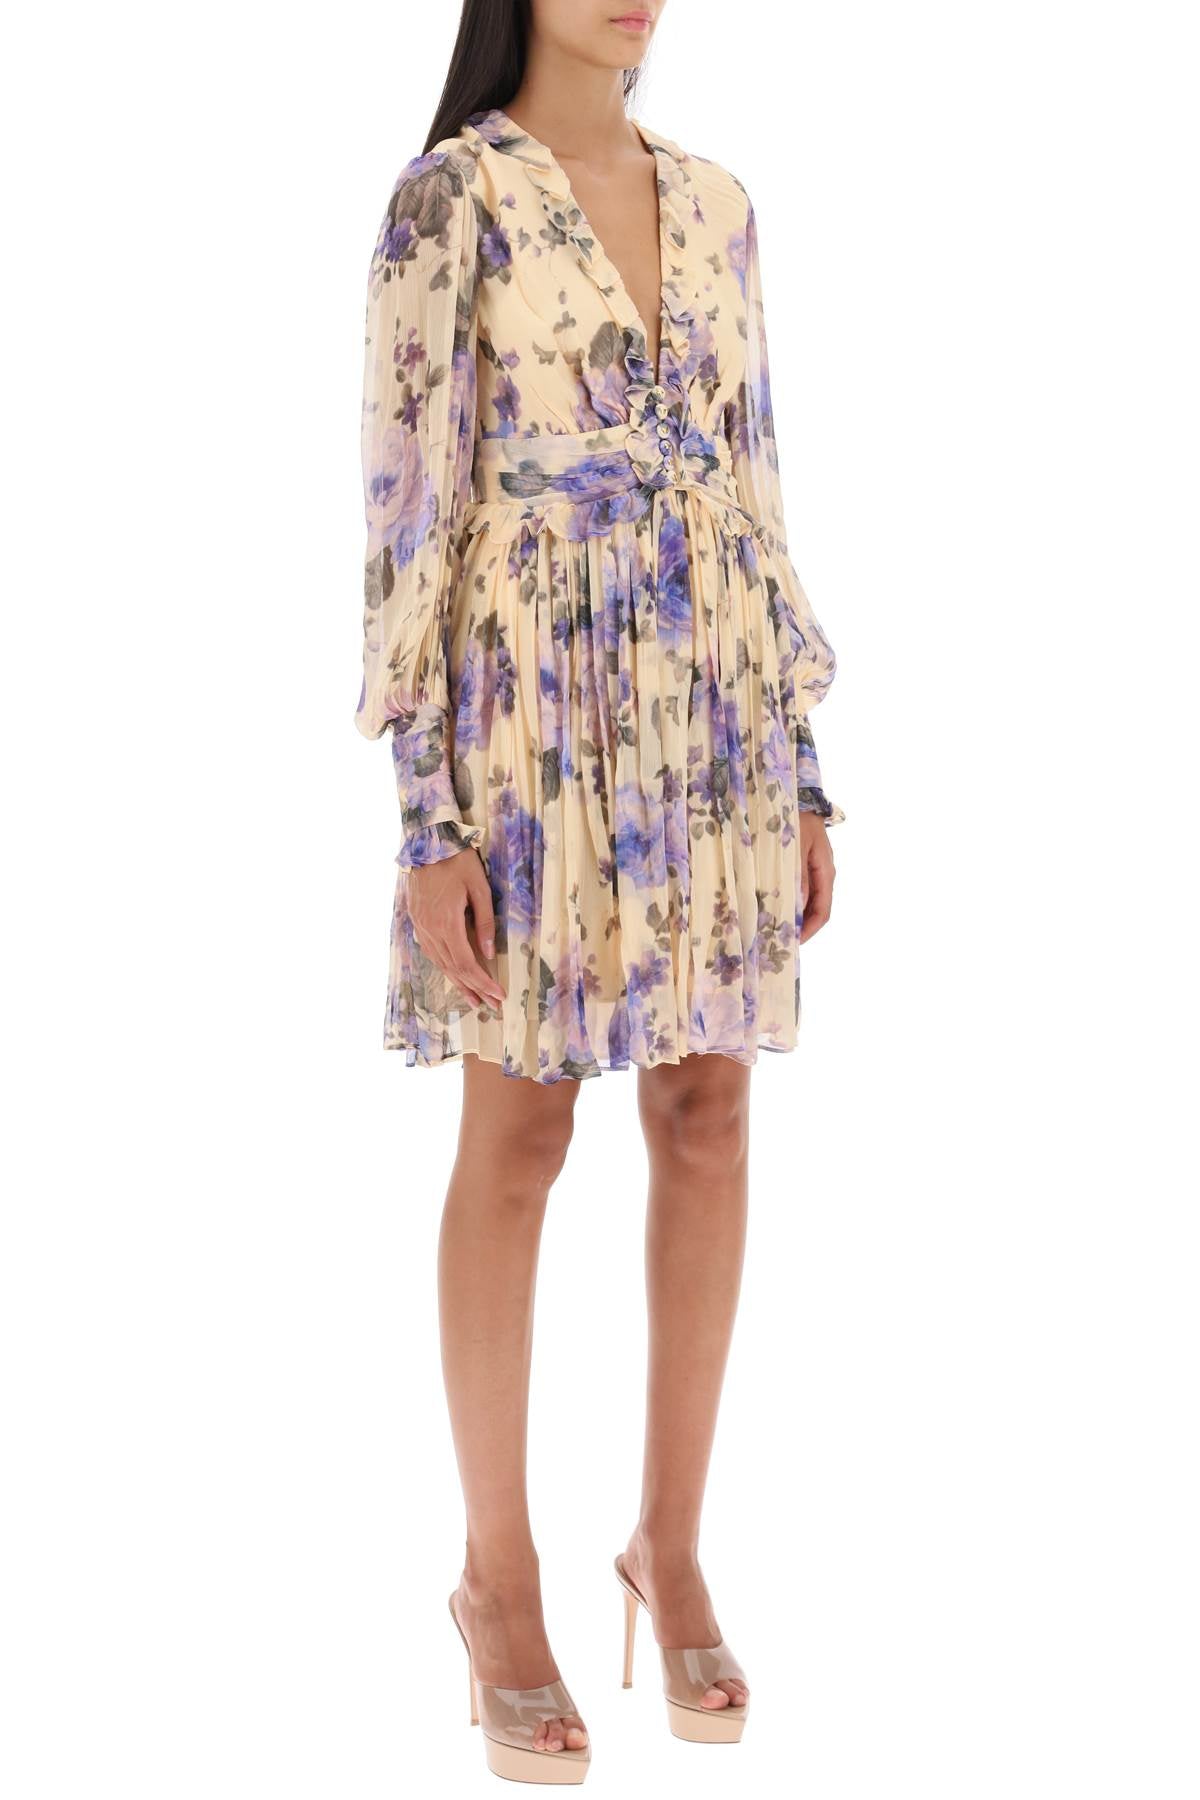 ZIMMERMANN Lyrical Chiffon Mini Dress for Women - Floral Print Long Sleeve Dress with V-Neckline and Circle Skirt